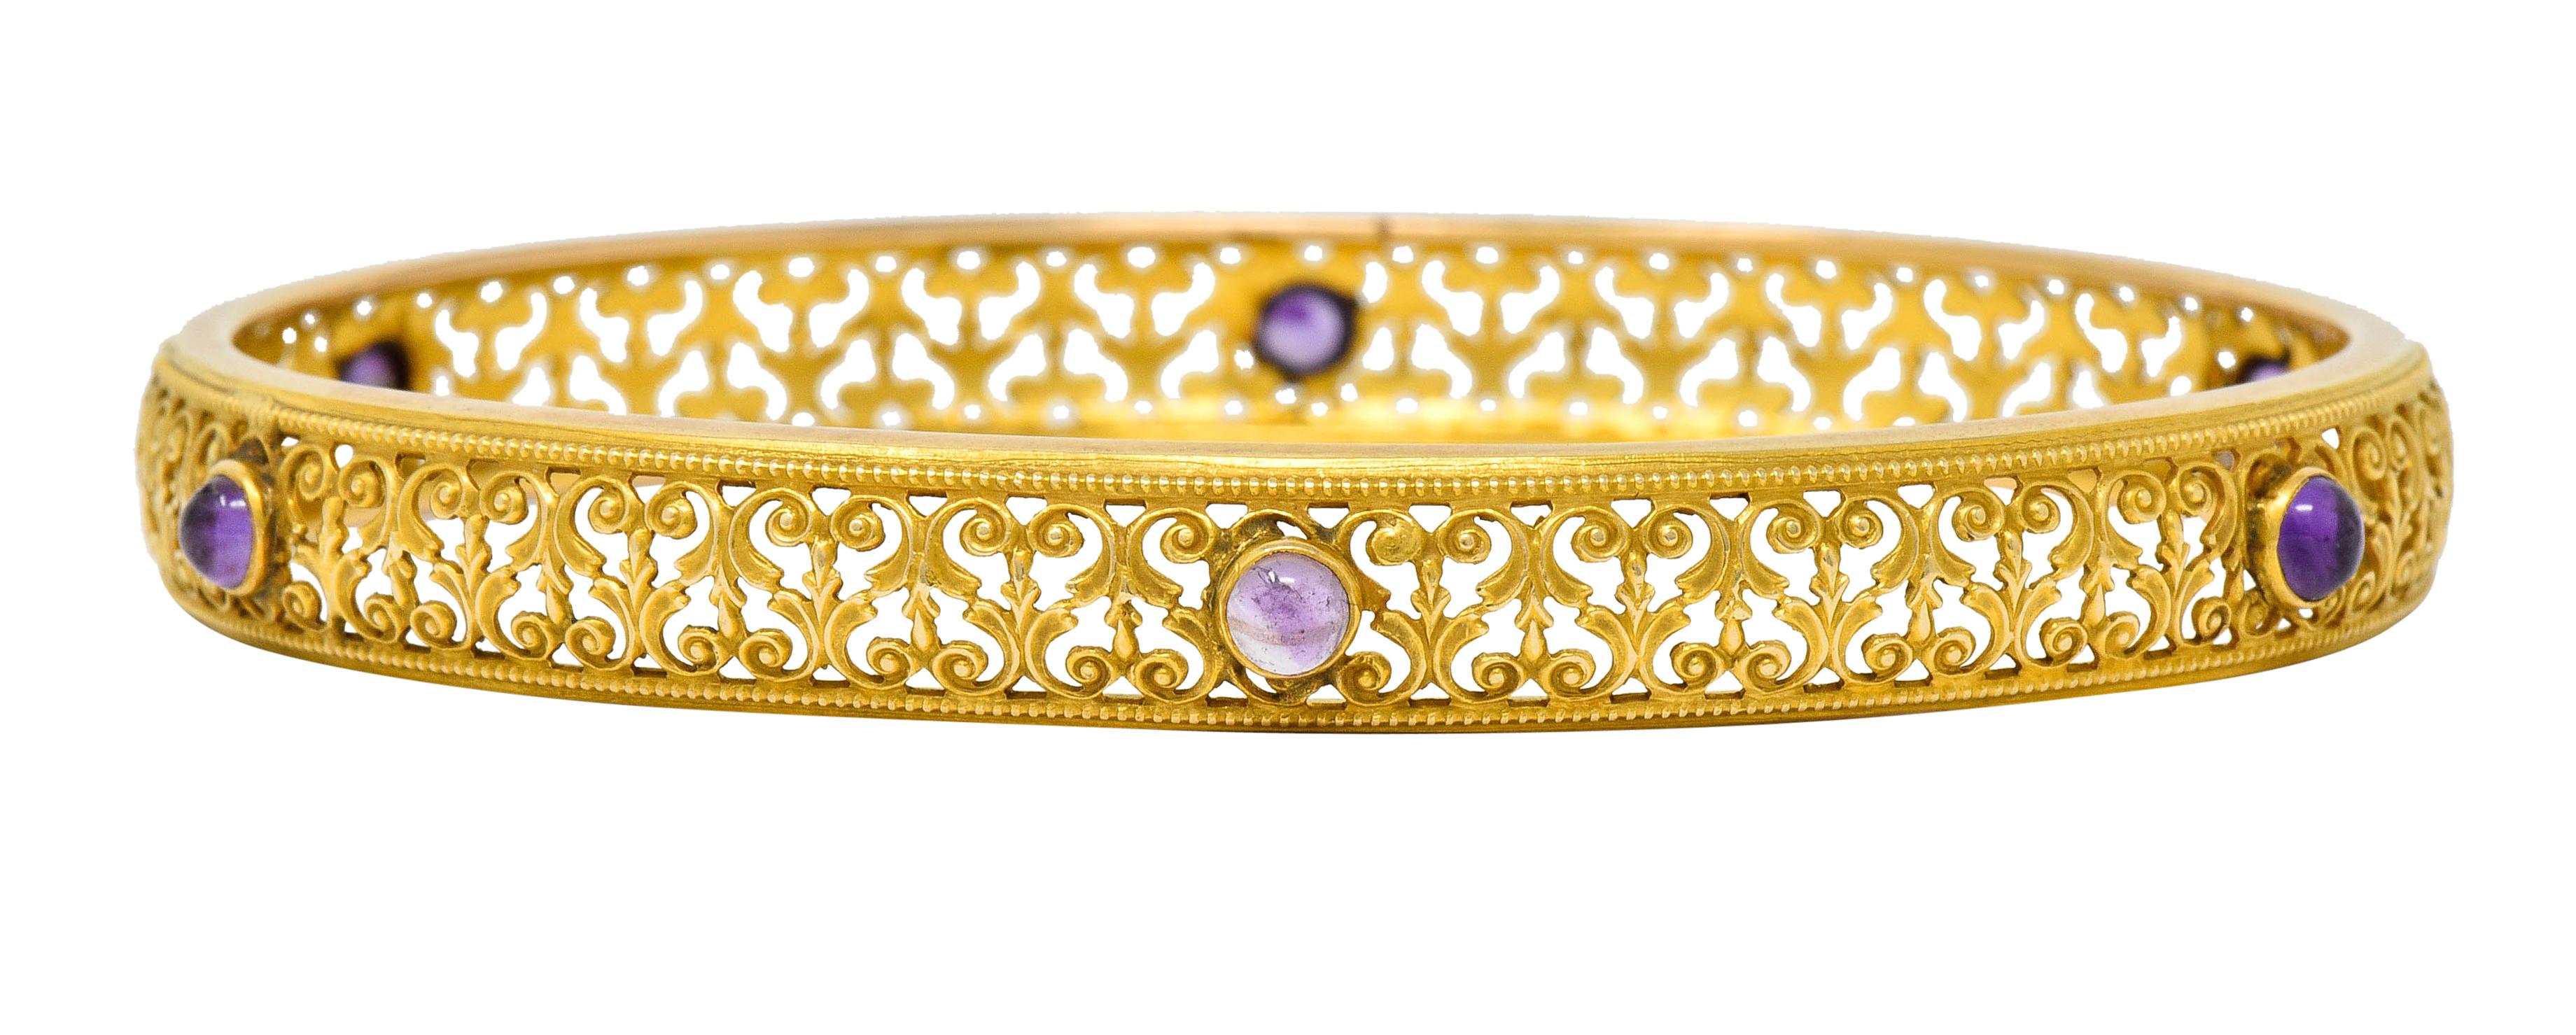 Cabochon Art Nouveau Amethyst 14 Karat Gold Scrolled Filigree Bangle Bracelet